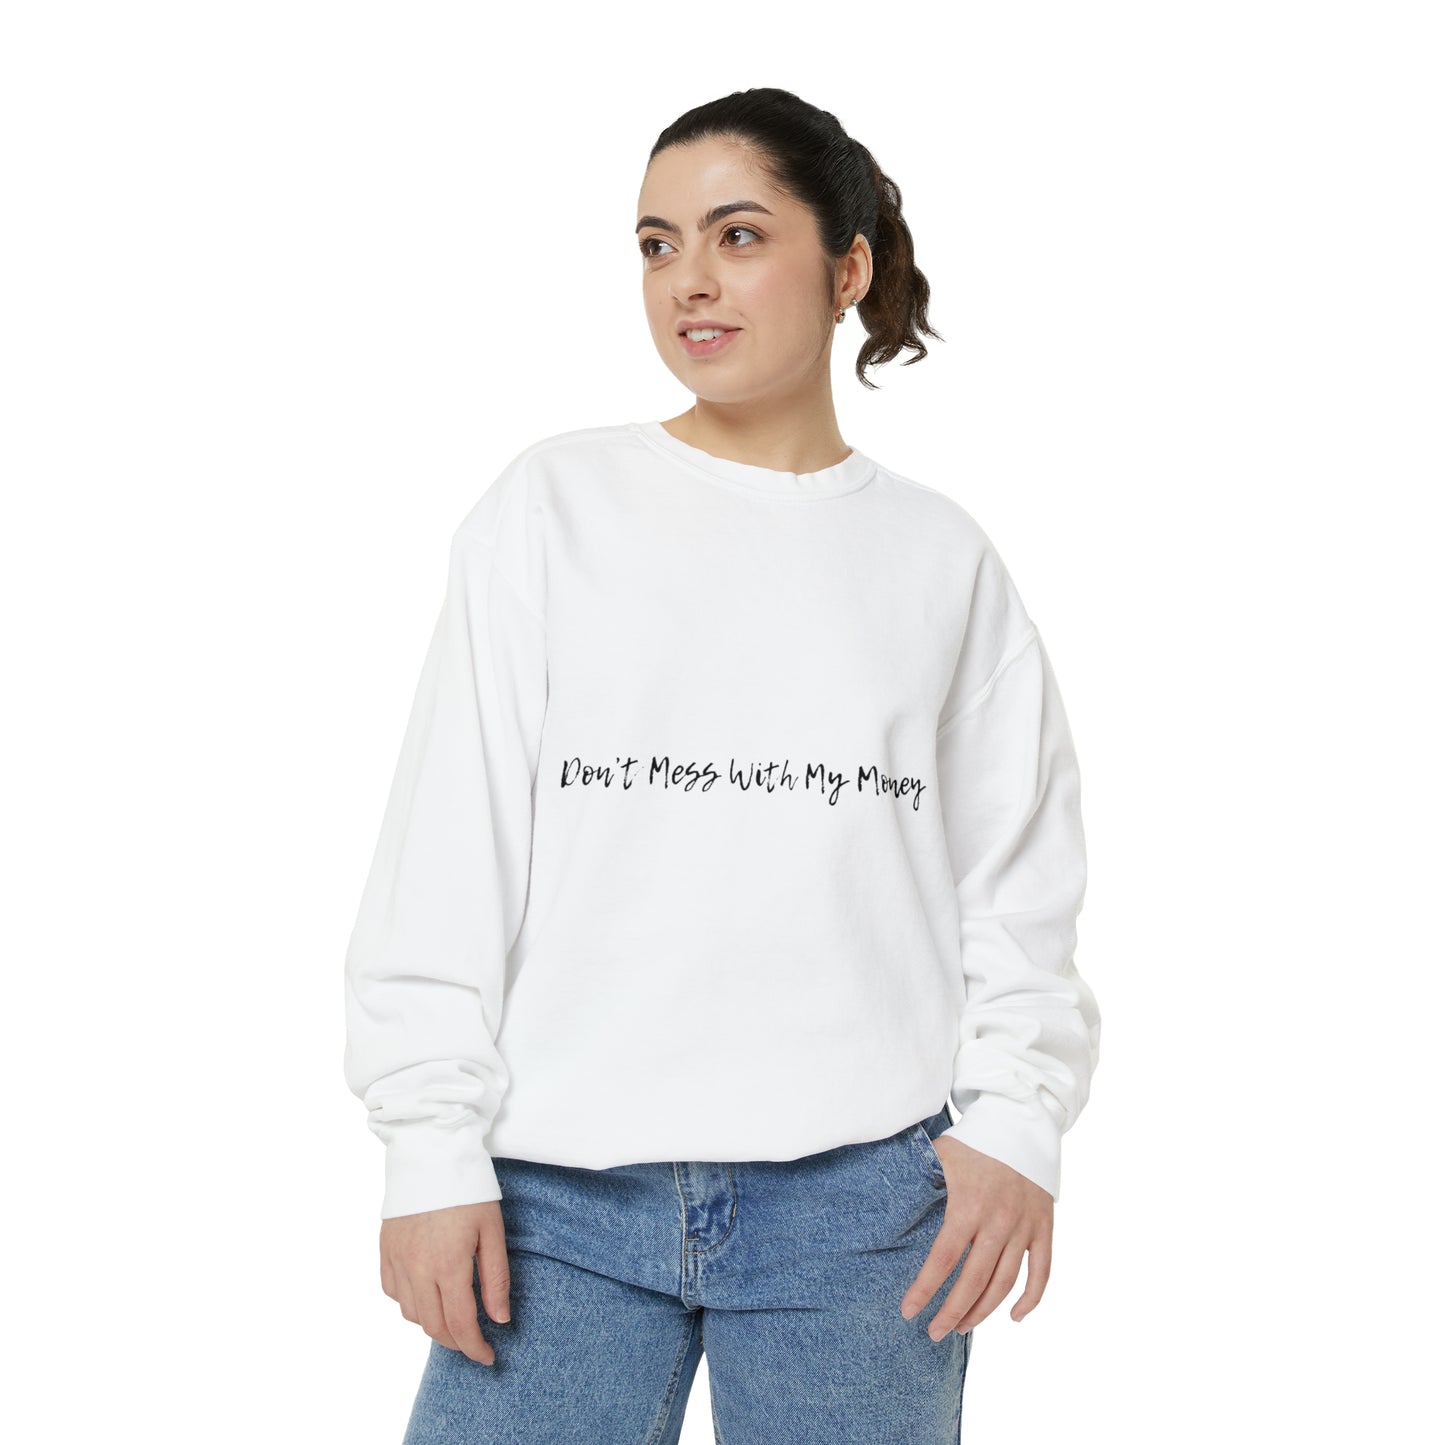 "Don't Mess with My Money" Sweatshirt